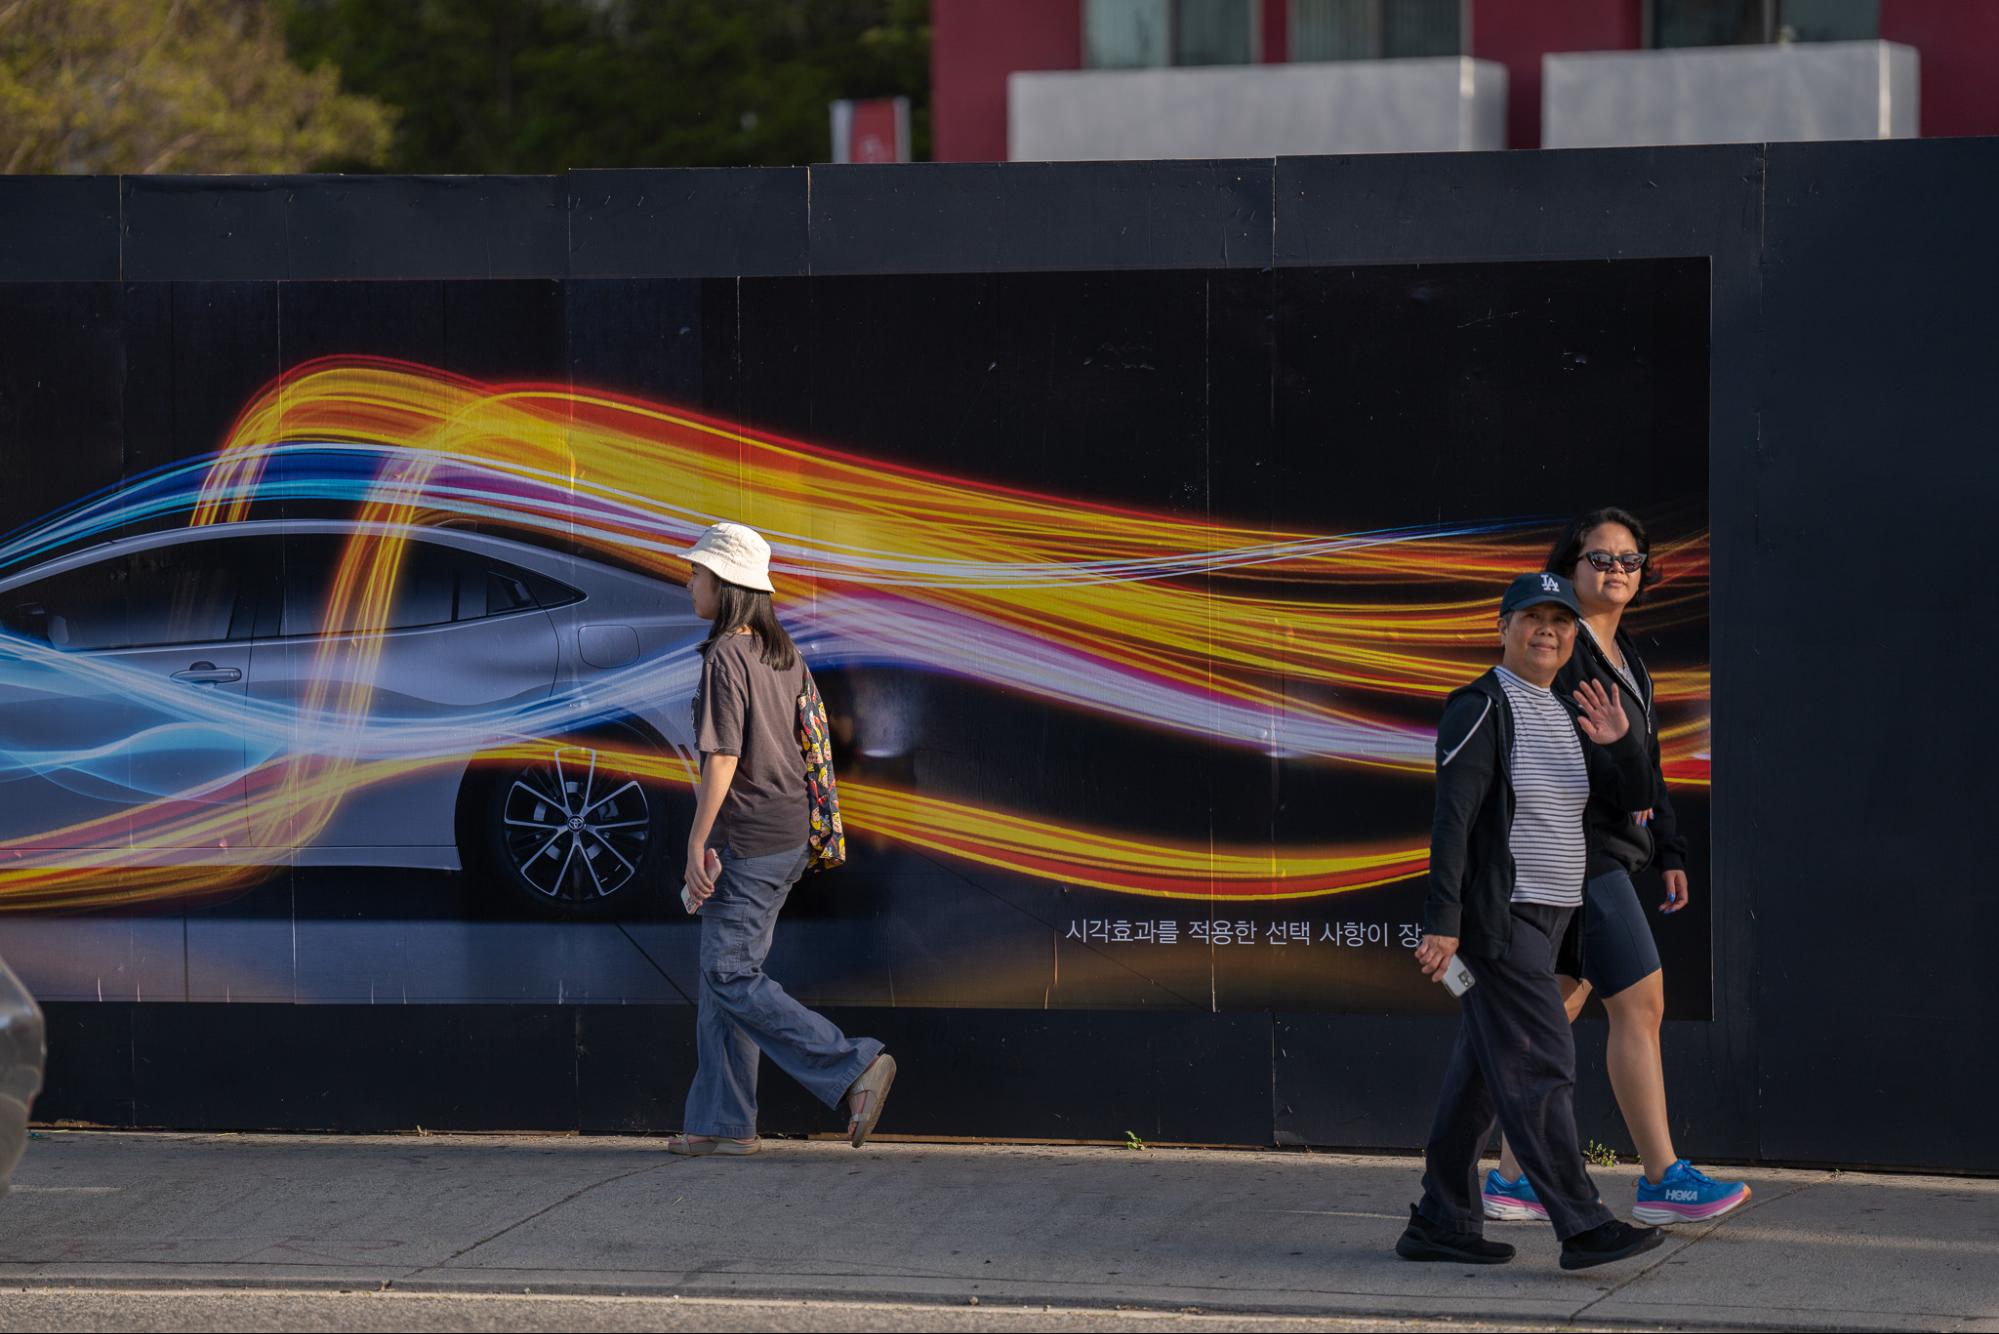 Toyota Prius Aerodynamics Graphic Barricade Woman Waving LA Koreatown Out-of-Home Advertising